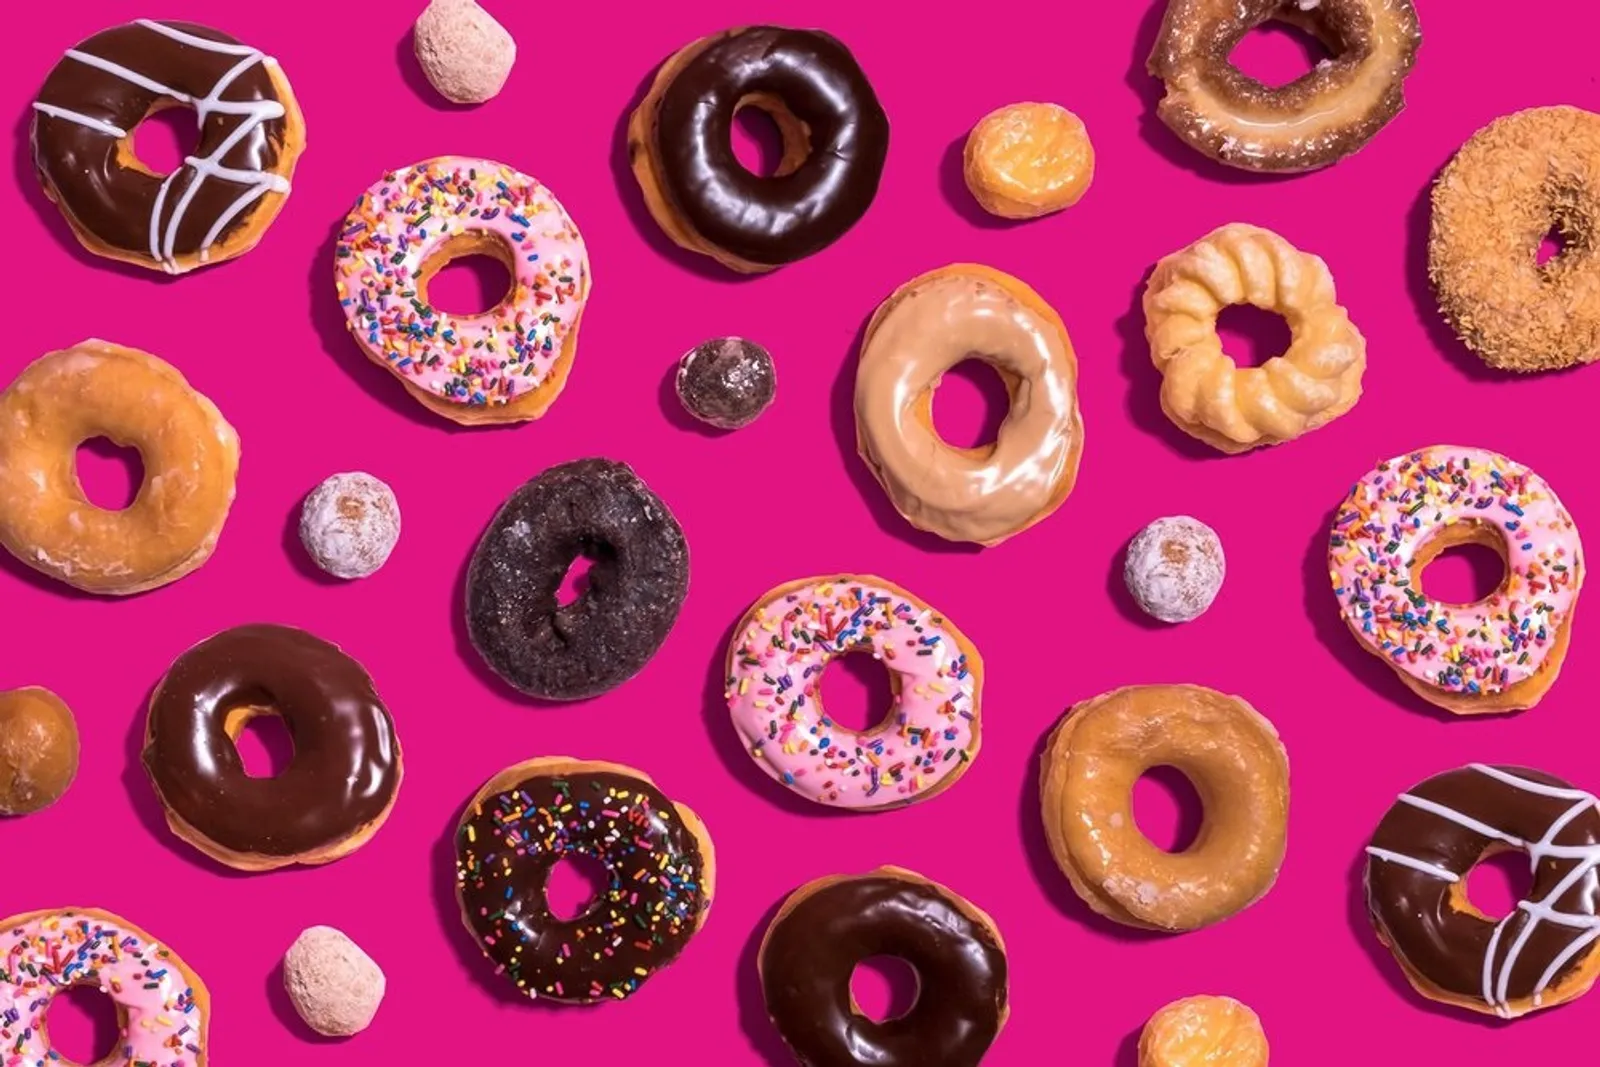 Berubah! Dunkin’ Donut Ungkapkan Perubahan Nama Merk Dagang